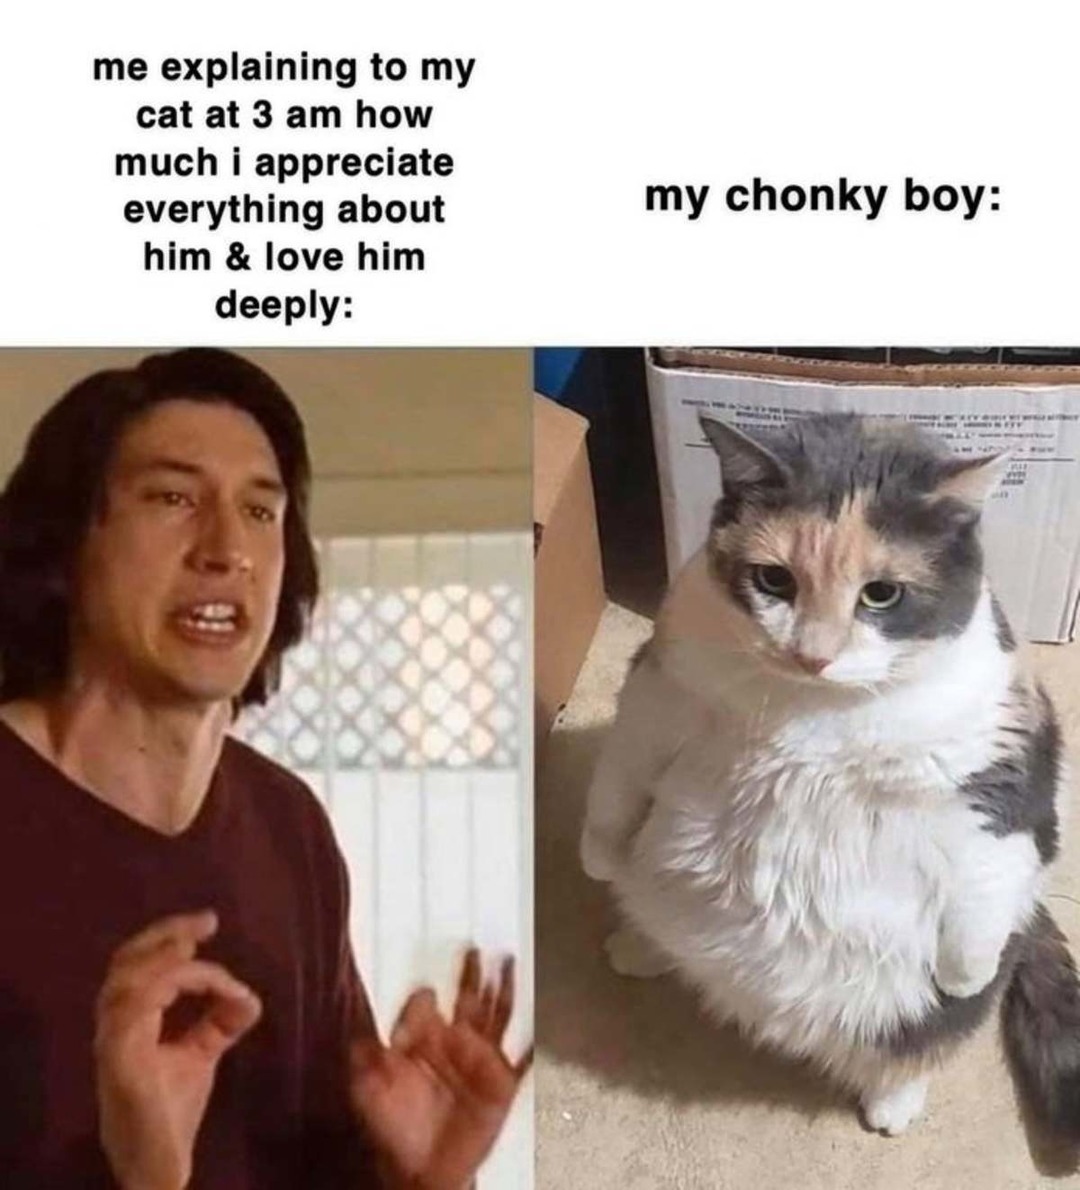 Explaining to your cat at 3 AM - meme